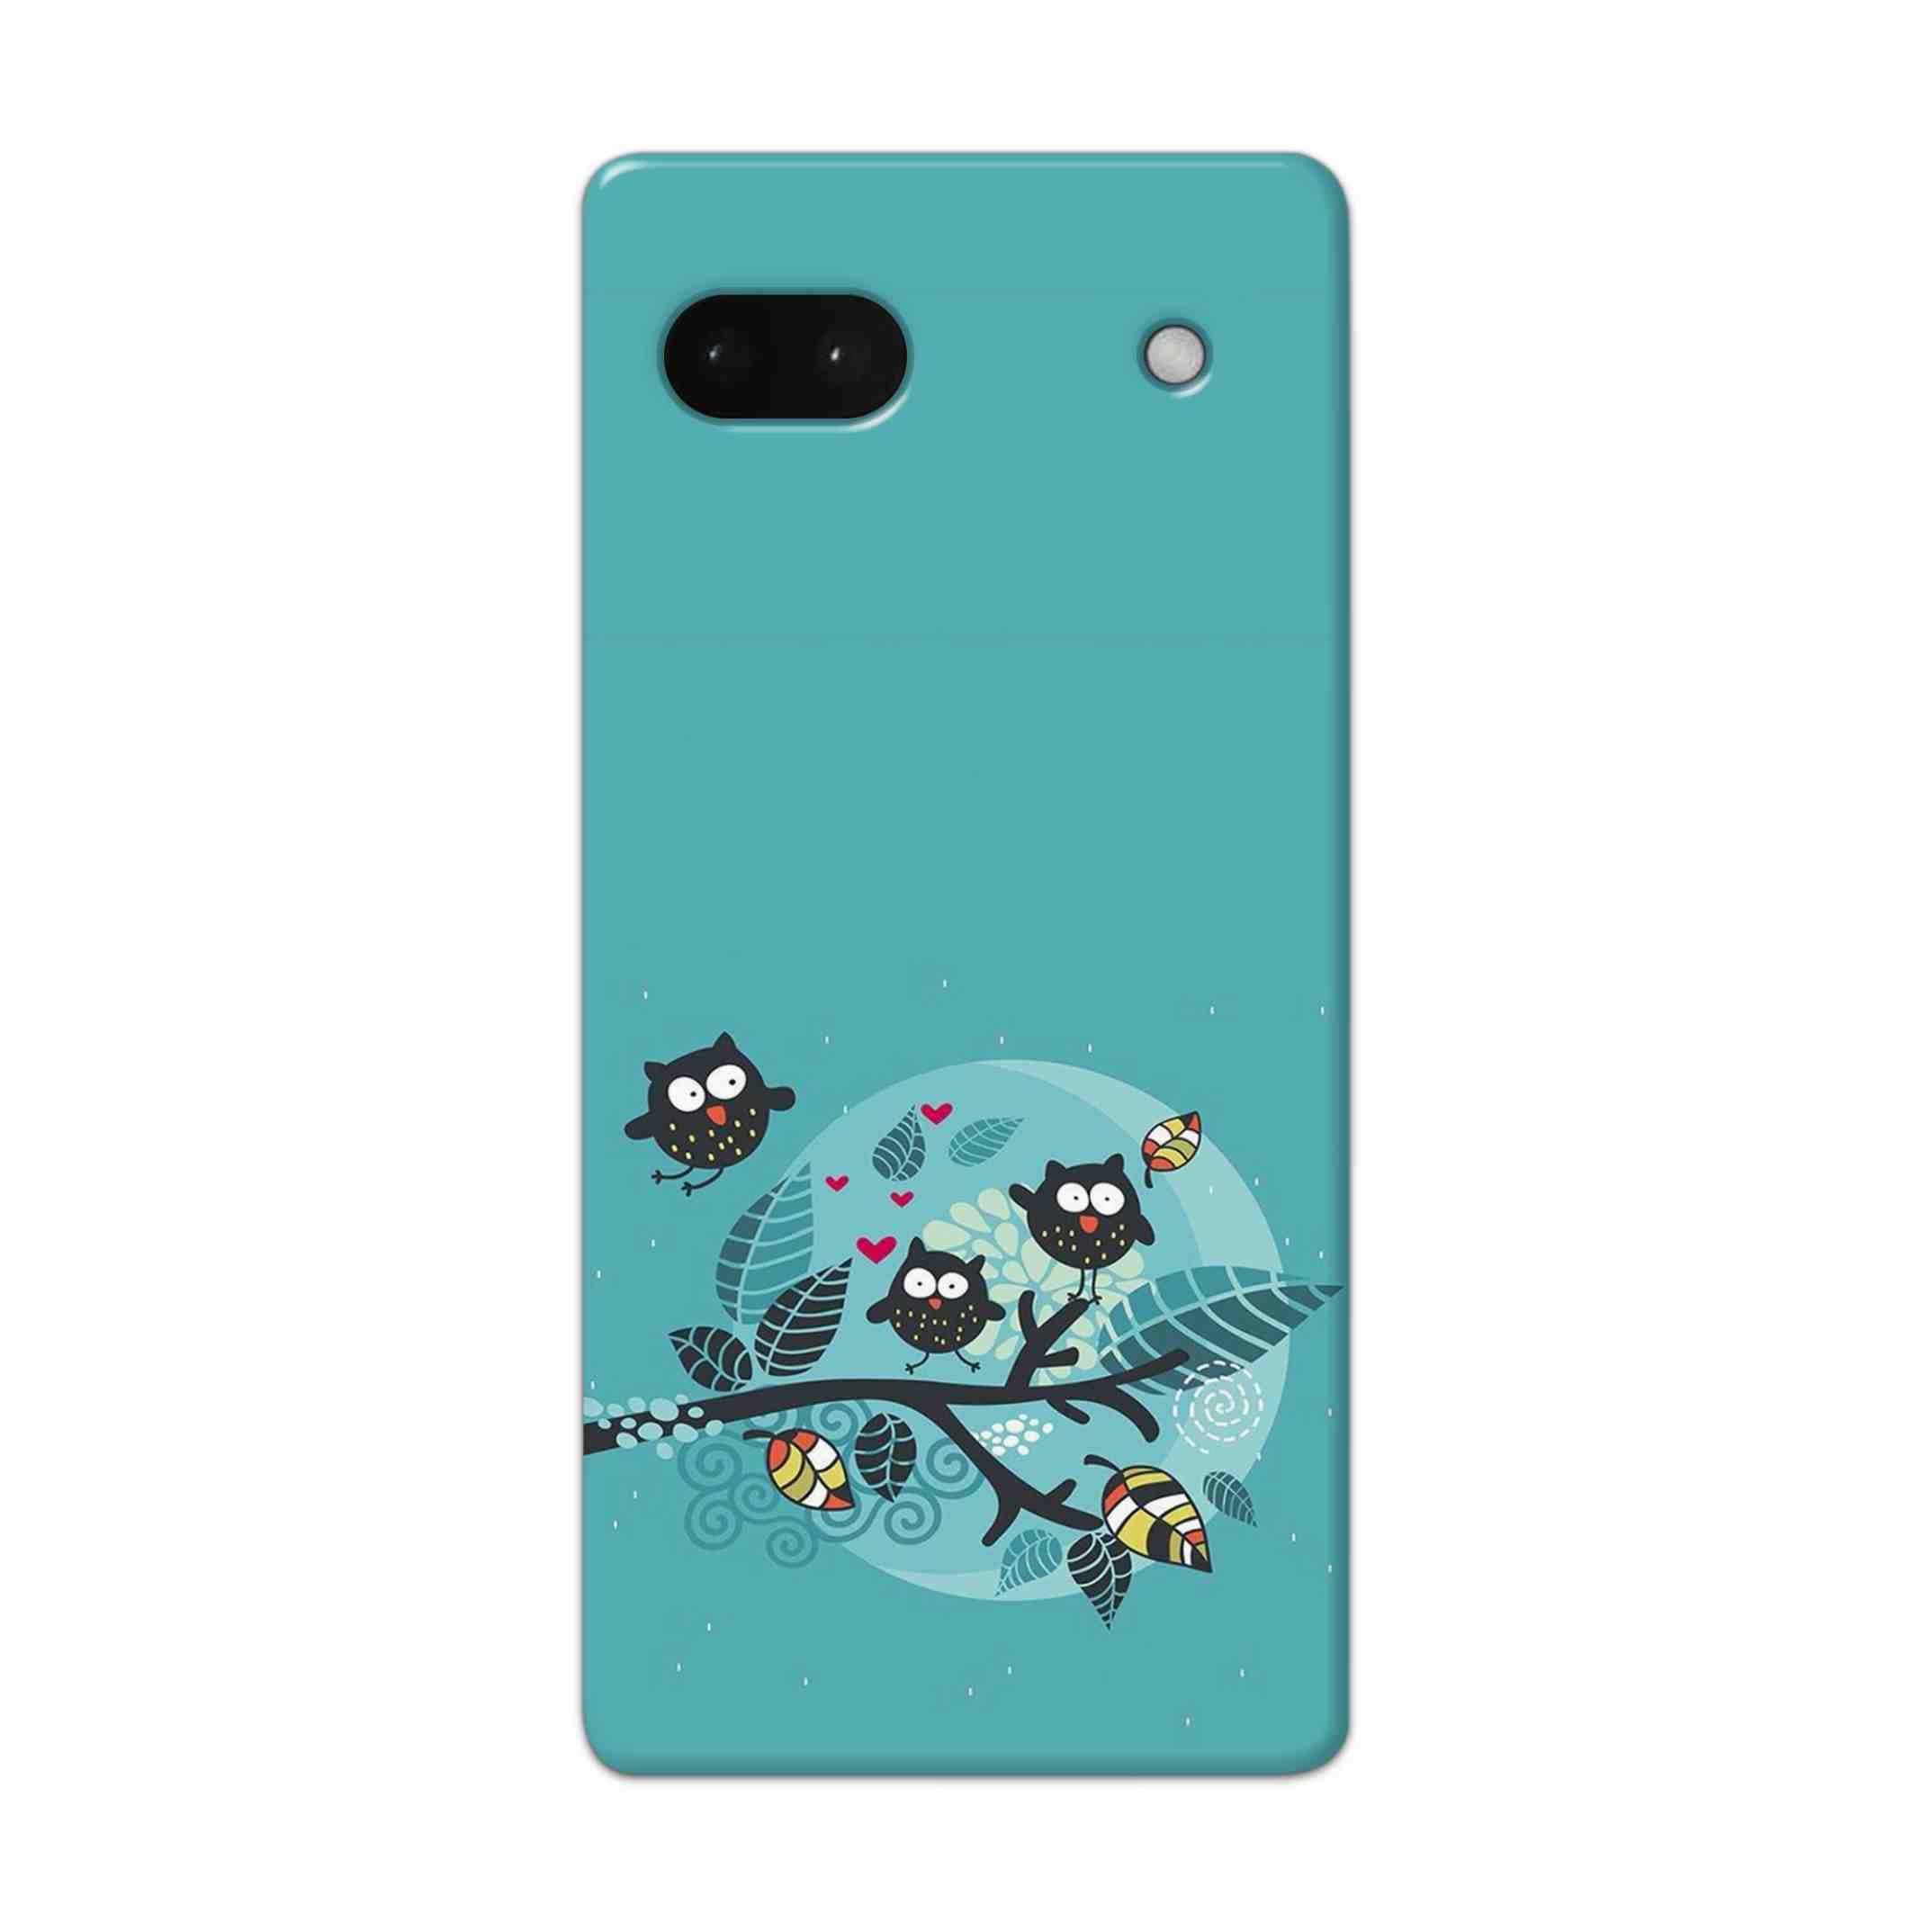 Buy Owl Hard Back Mobile Phone Case Cover For Google Pixel 6a Online